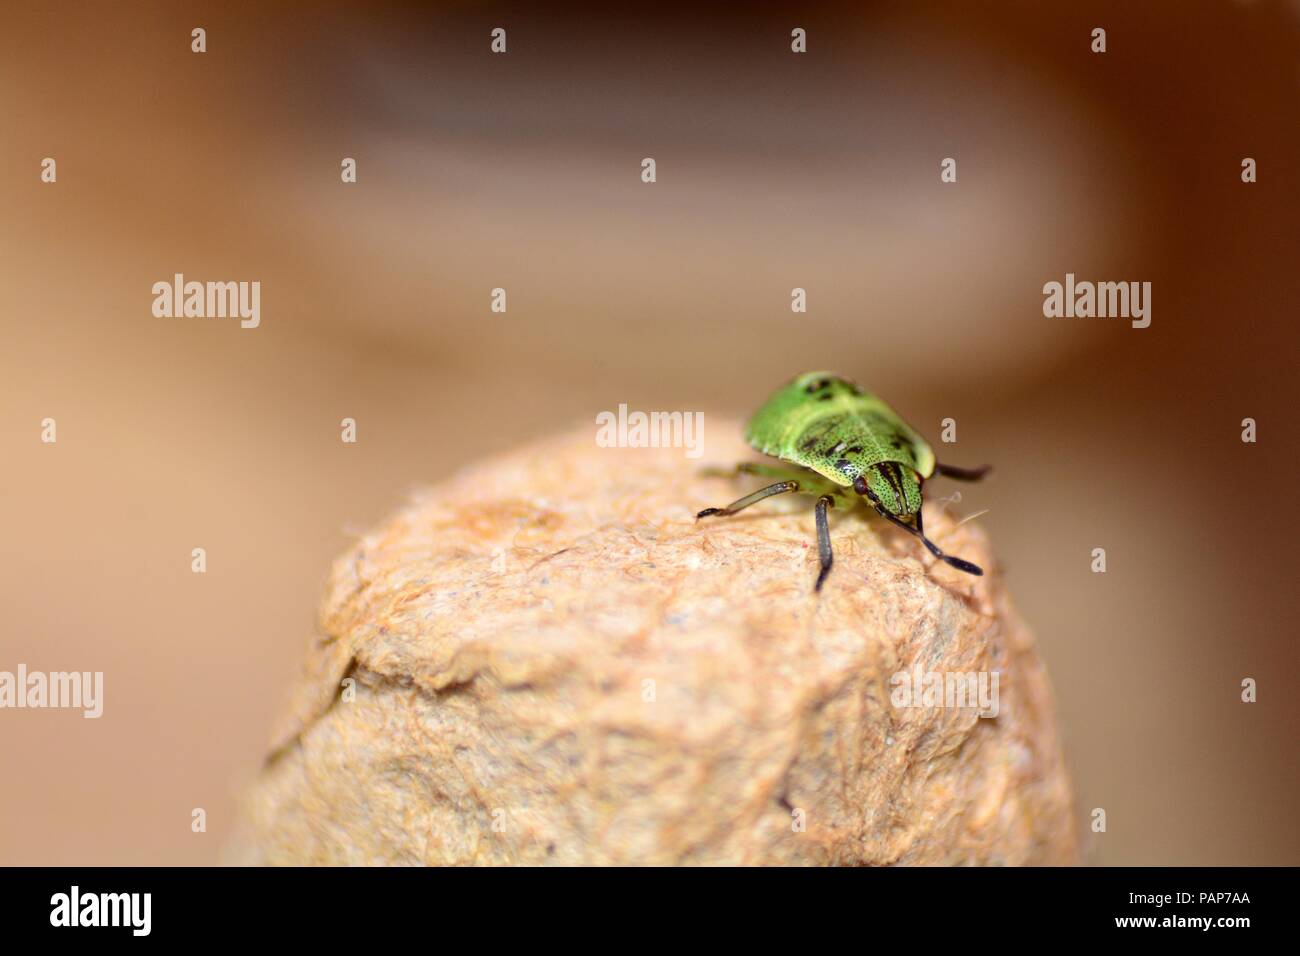 Nymph of a green stink bug ( Palomena prasina ) Stock Photo